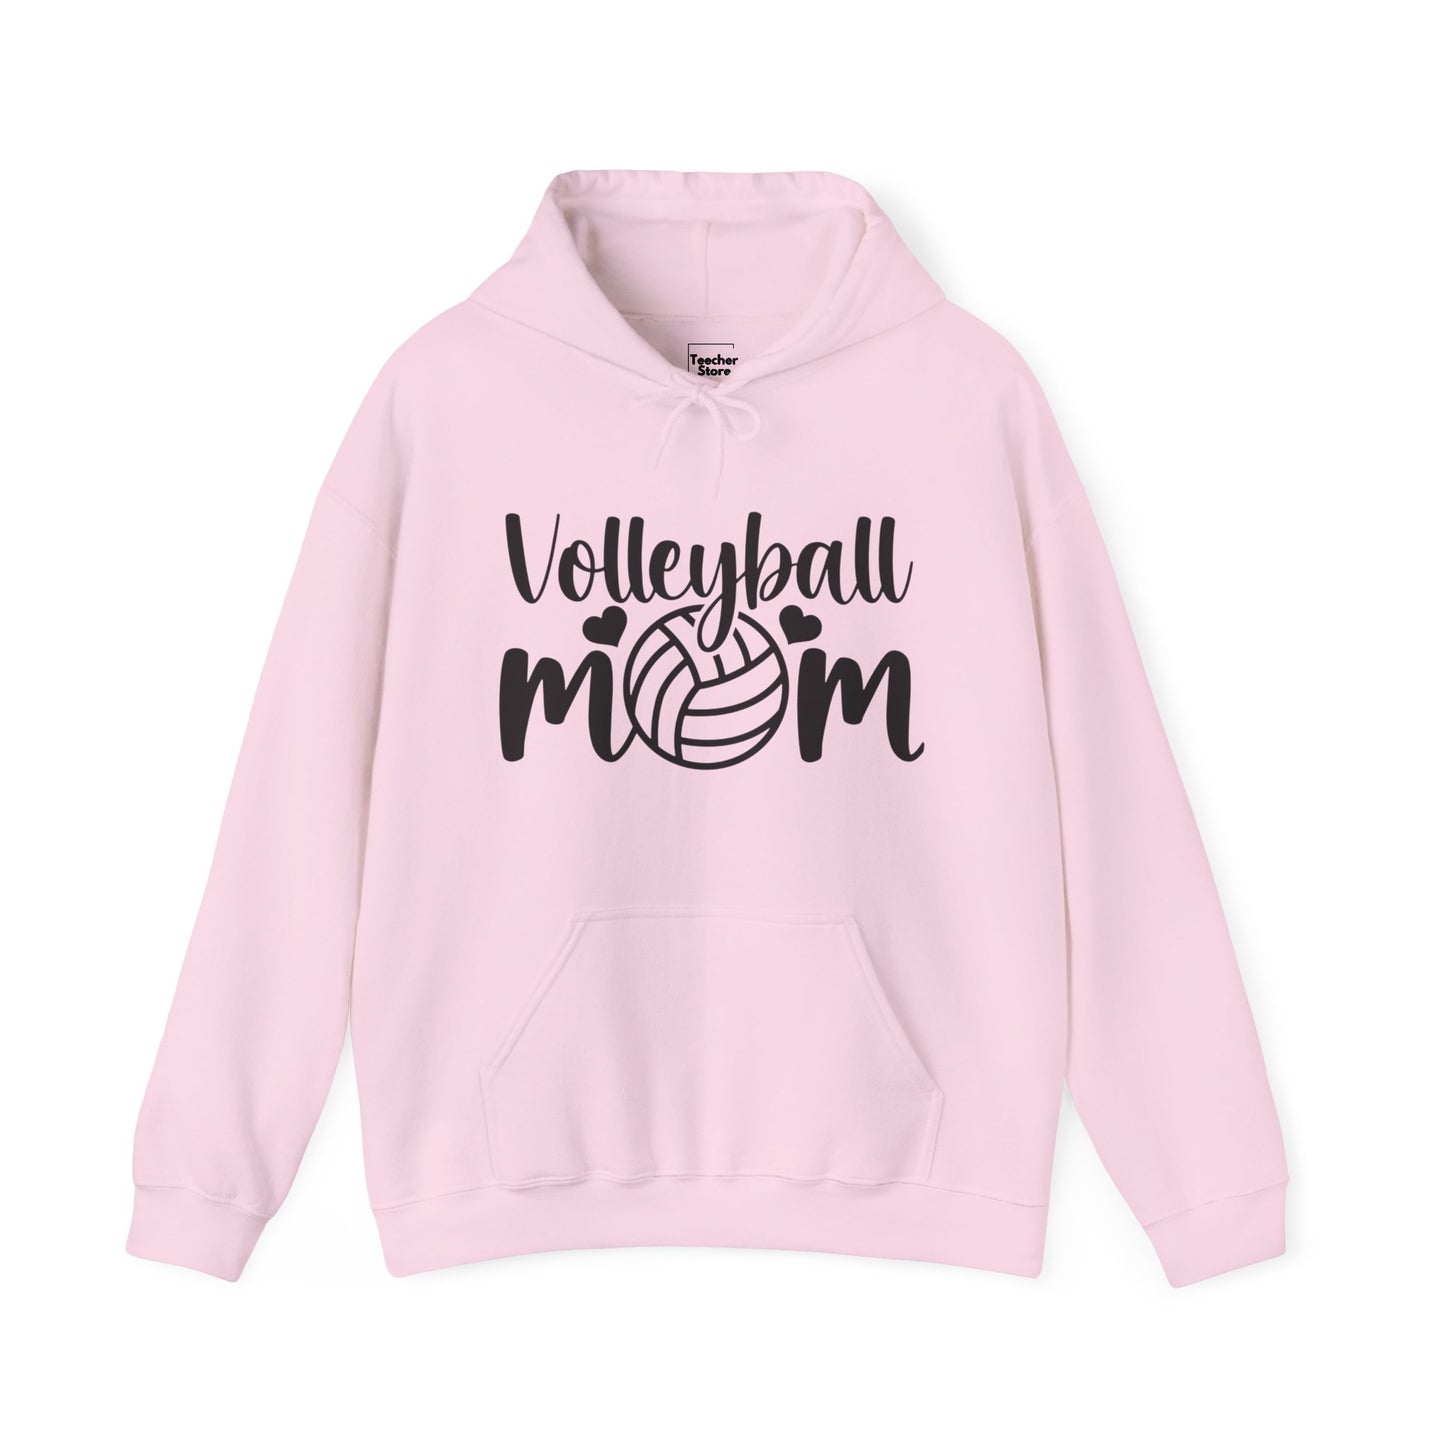 Volleyball Mom Hooded Sweatshirt